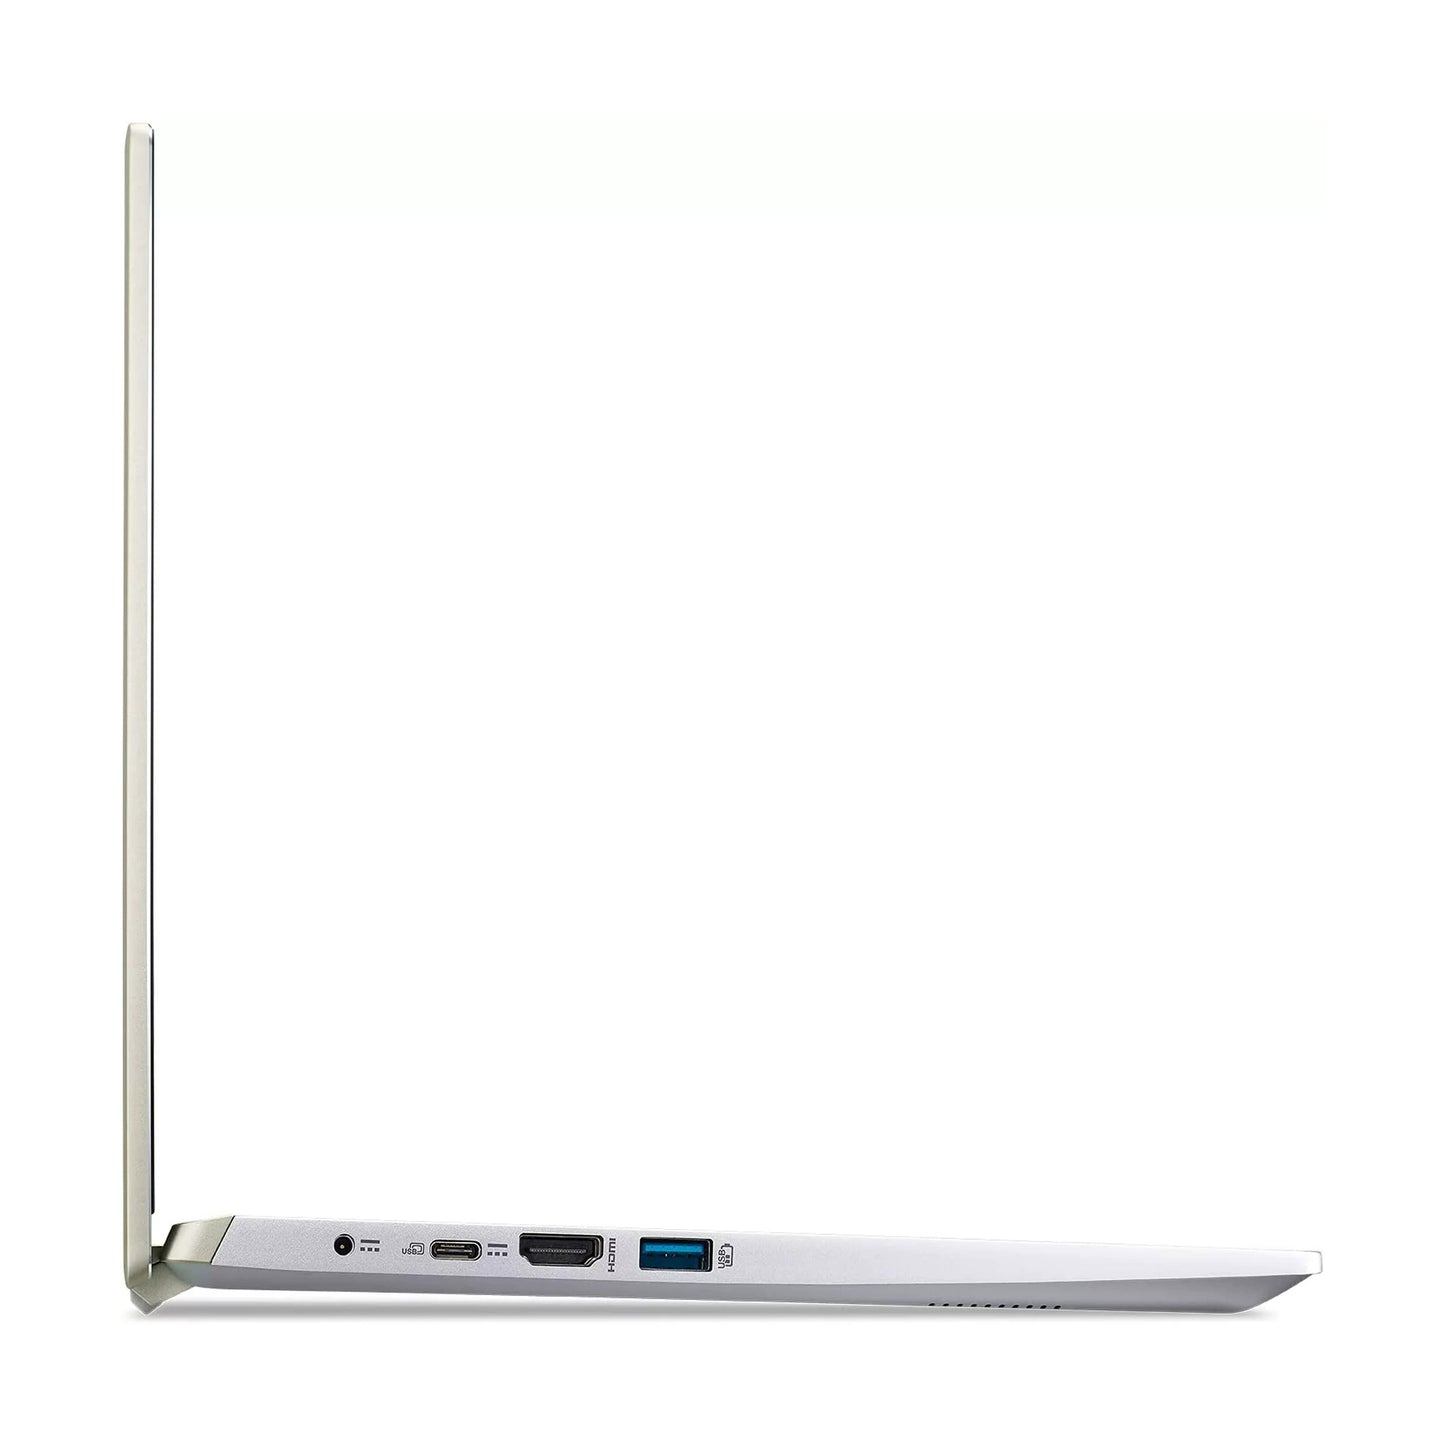 Acer Swift X SFX14-41G-R1S6 Ryzen 7 5800u Rtx 3050 Ti True Color Creator Laptop Offer (New OB)